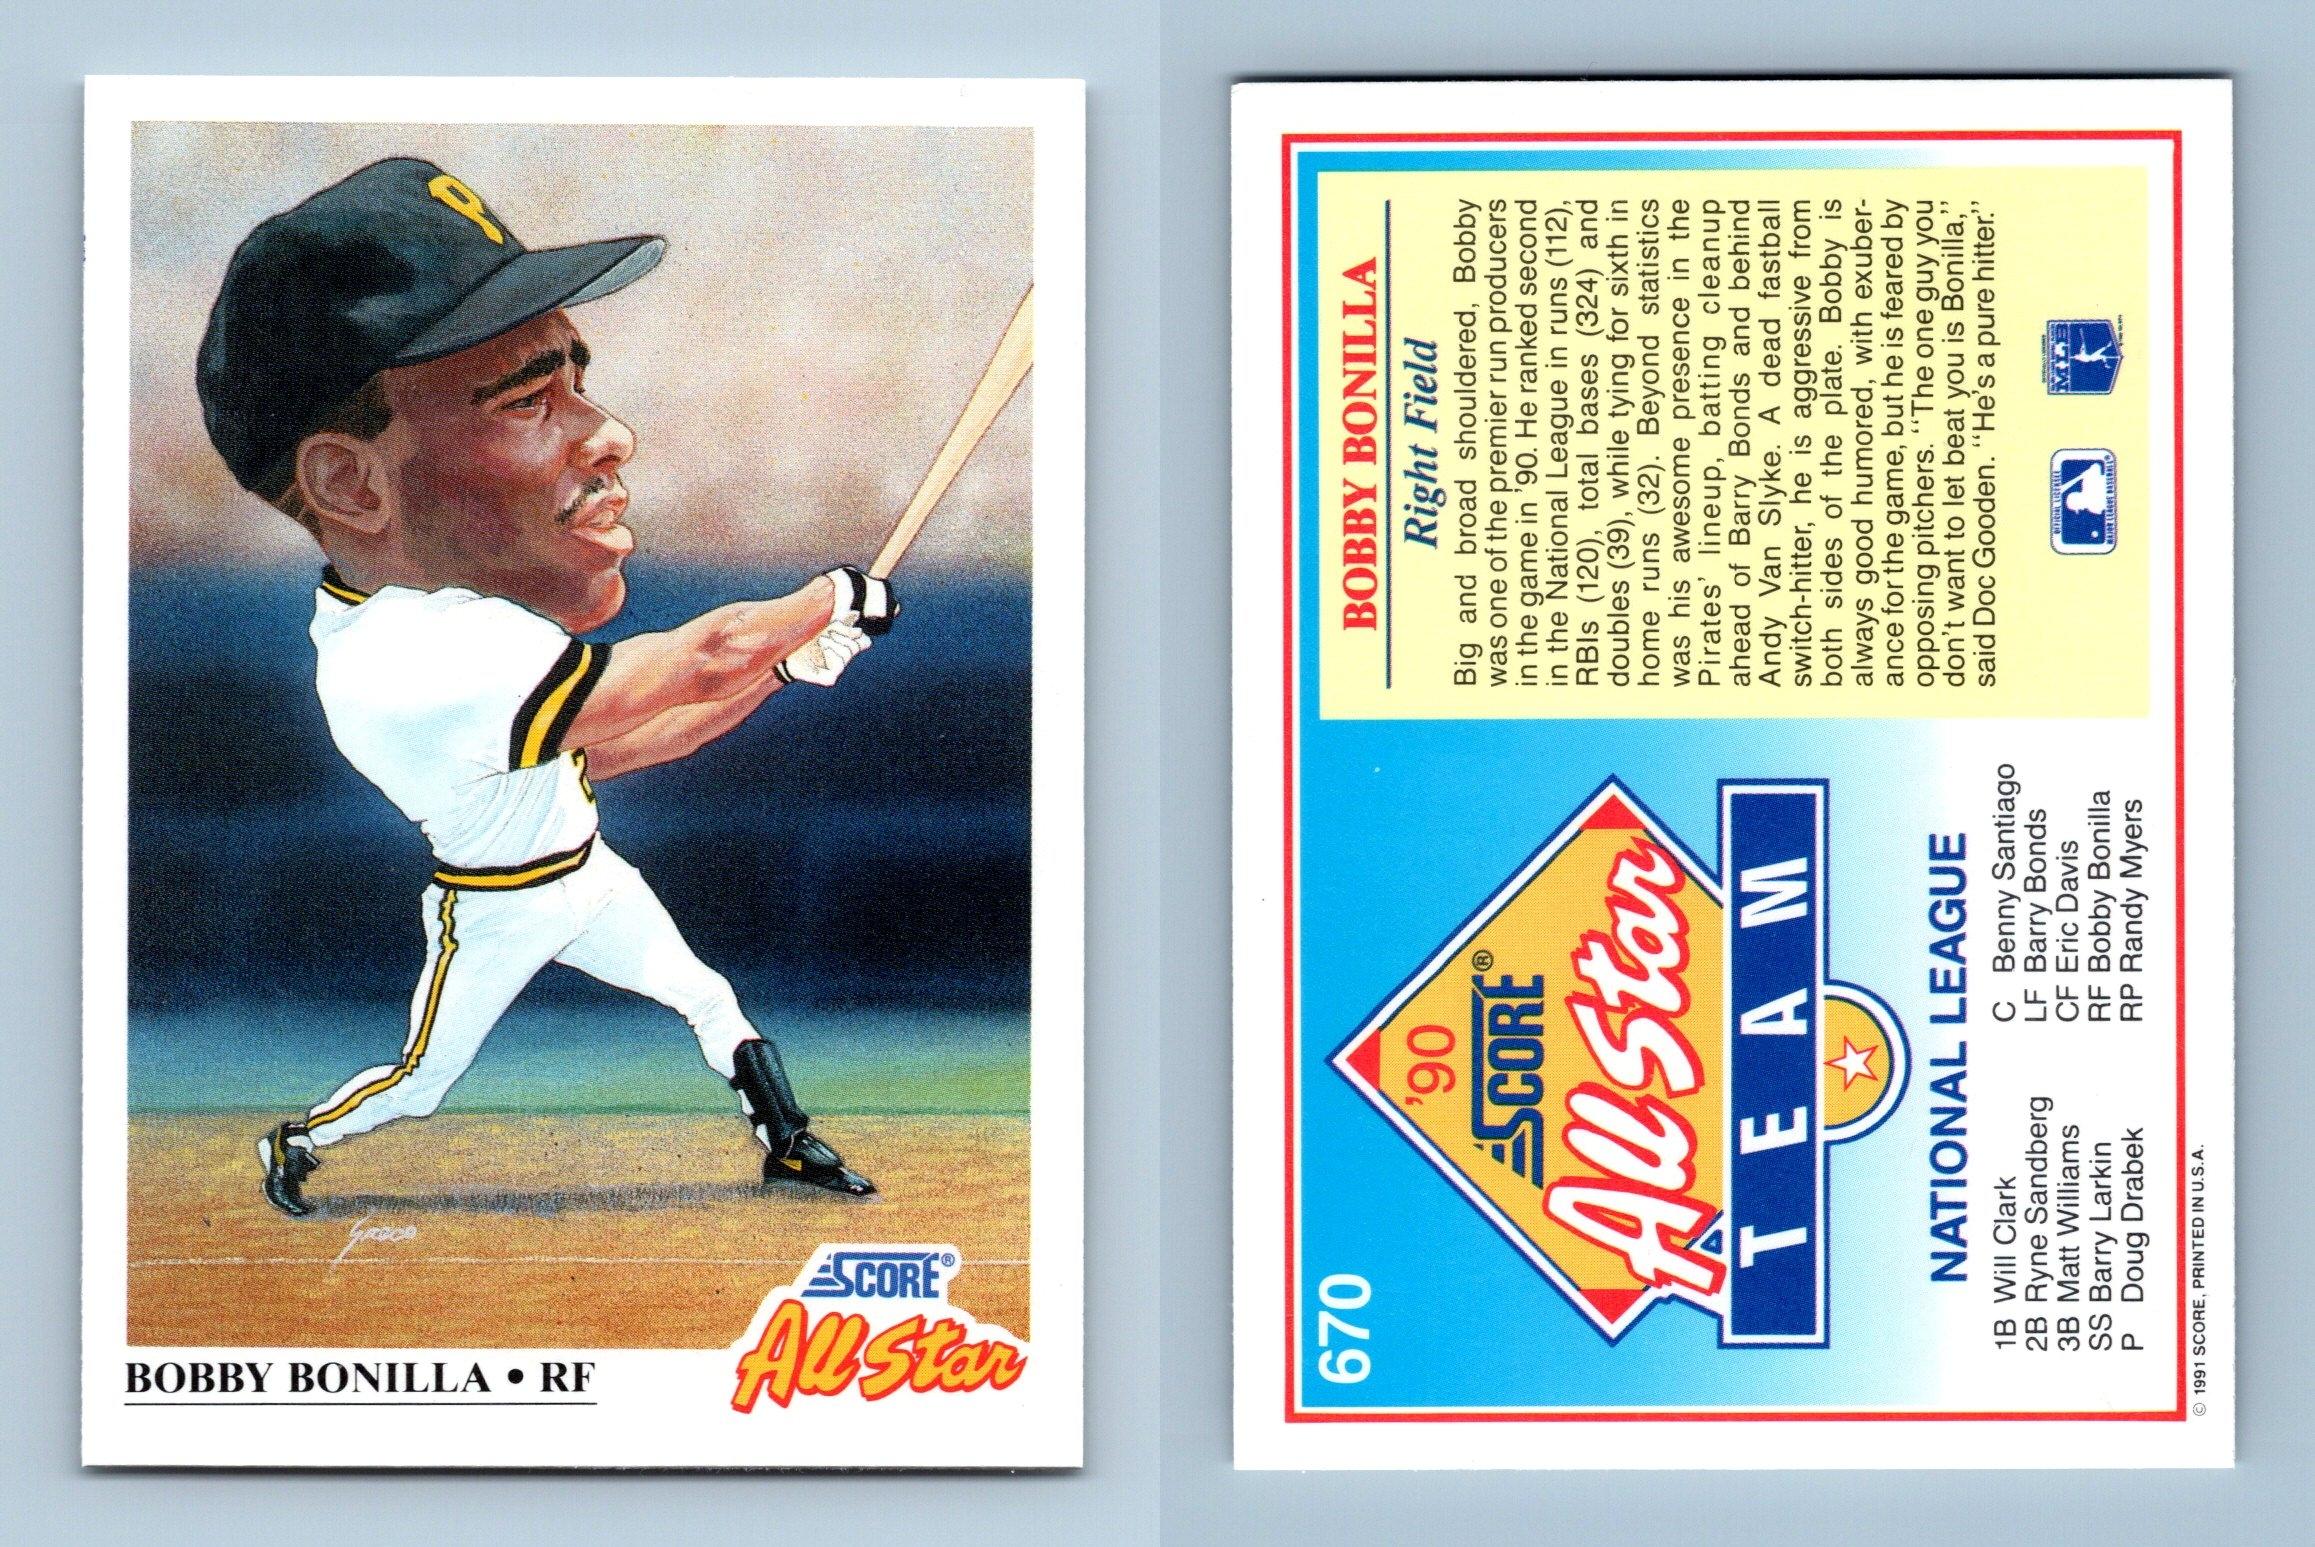 The Official Unofficial Bobby Bonilla Day Baseball Card - Beckett News